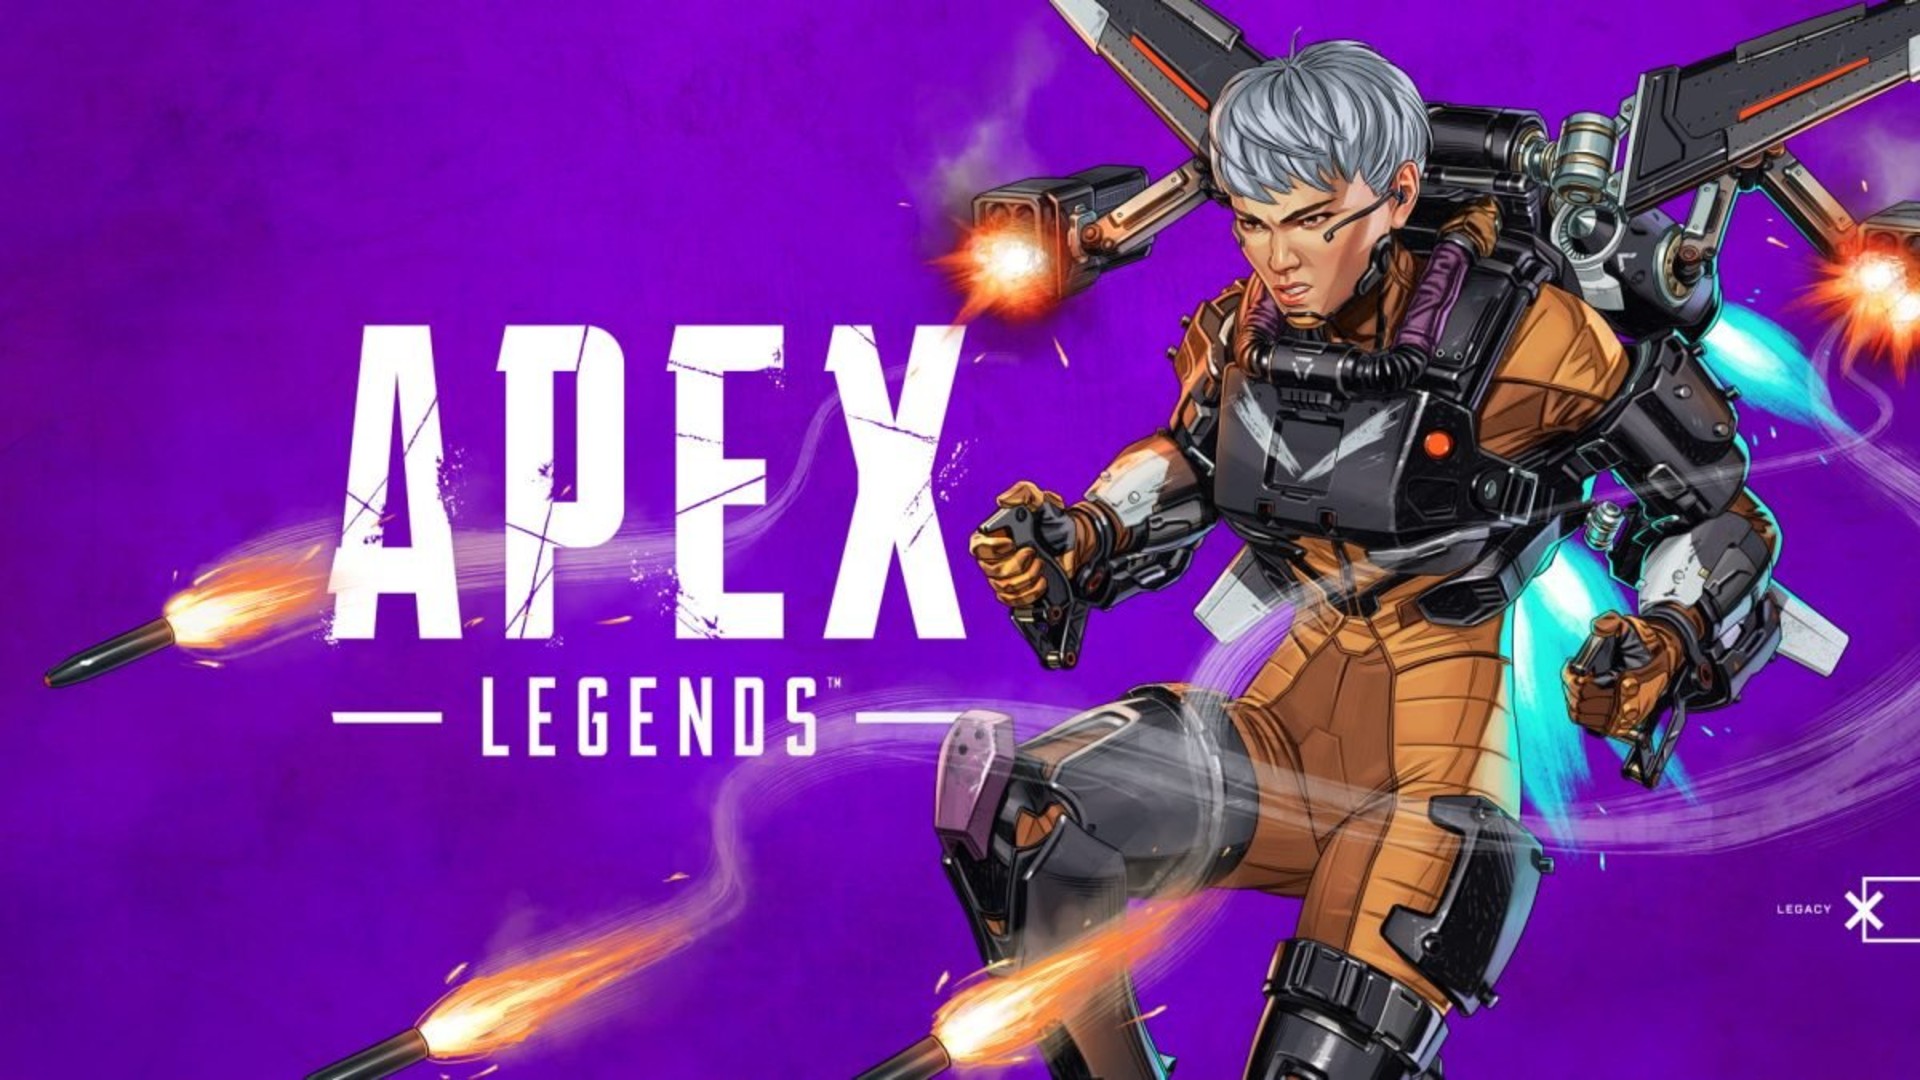 Apex Legends Season 9 จะมาพร้อมตัวละครใหม่ Valkyrie